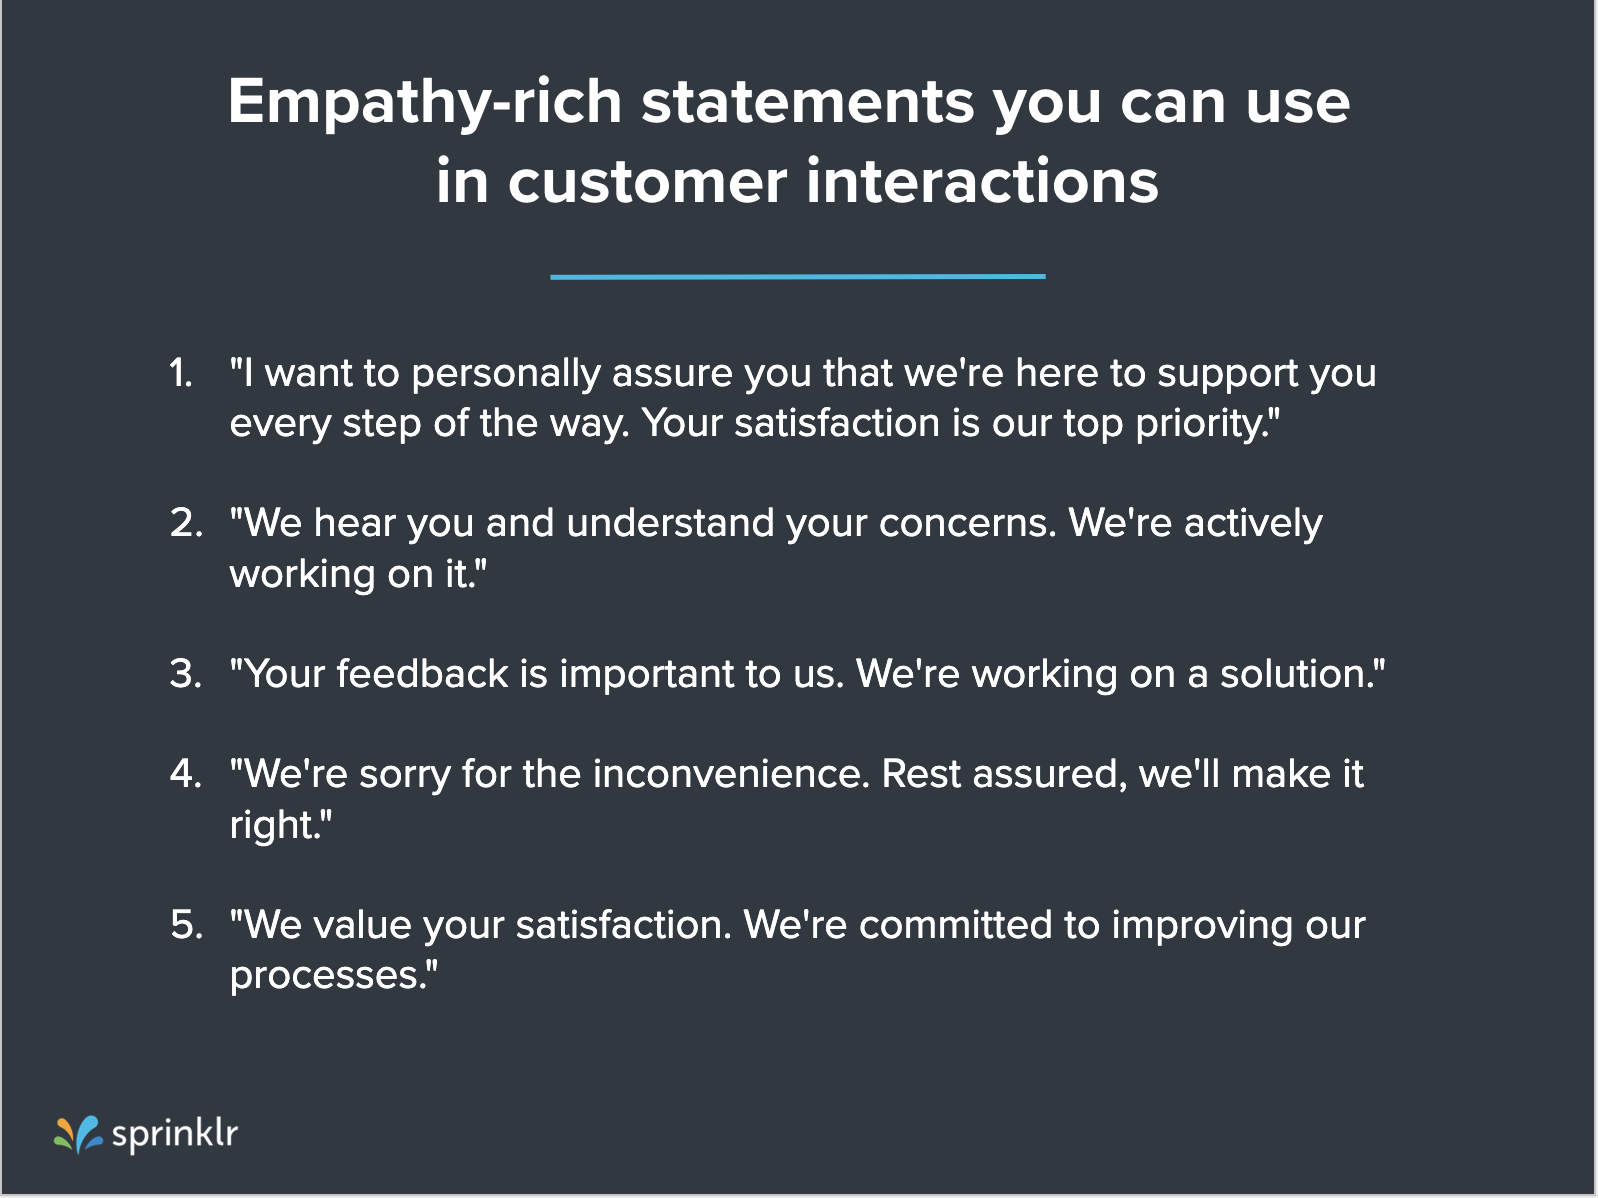 Image 2 - empathy blog